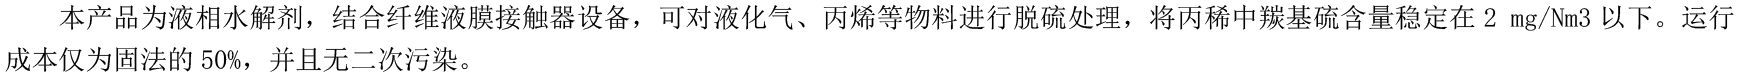 3-羰基硫水解剂.png